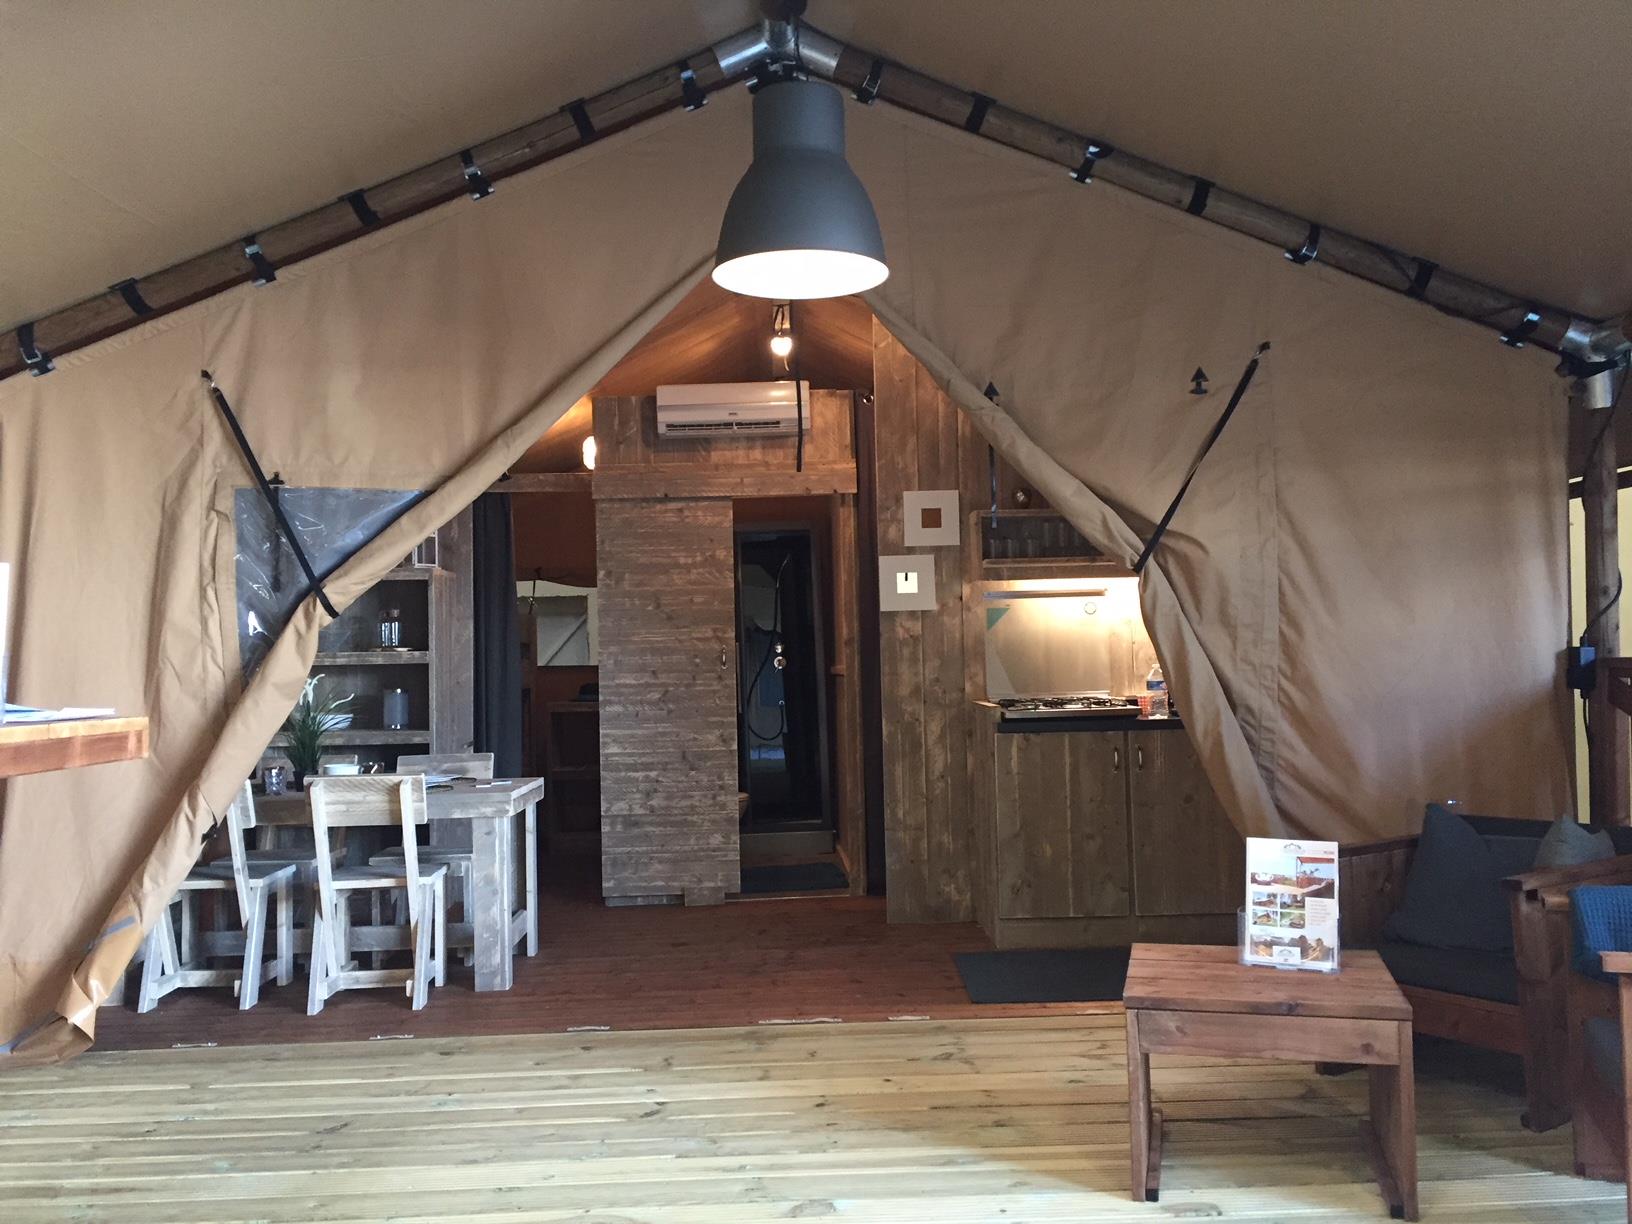 Huuraccommodatie - Lodge Woody - Au Valbonheur (Camping le Plan d'Eau)